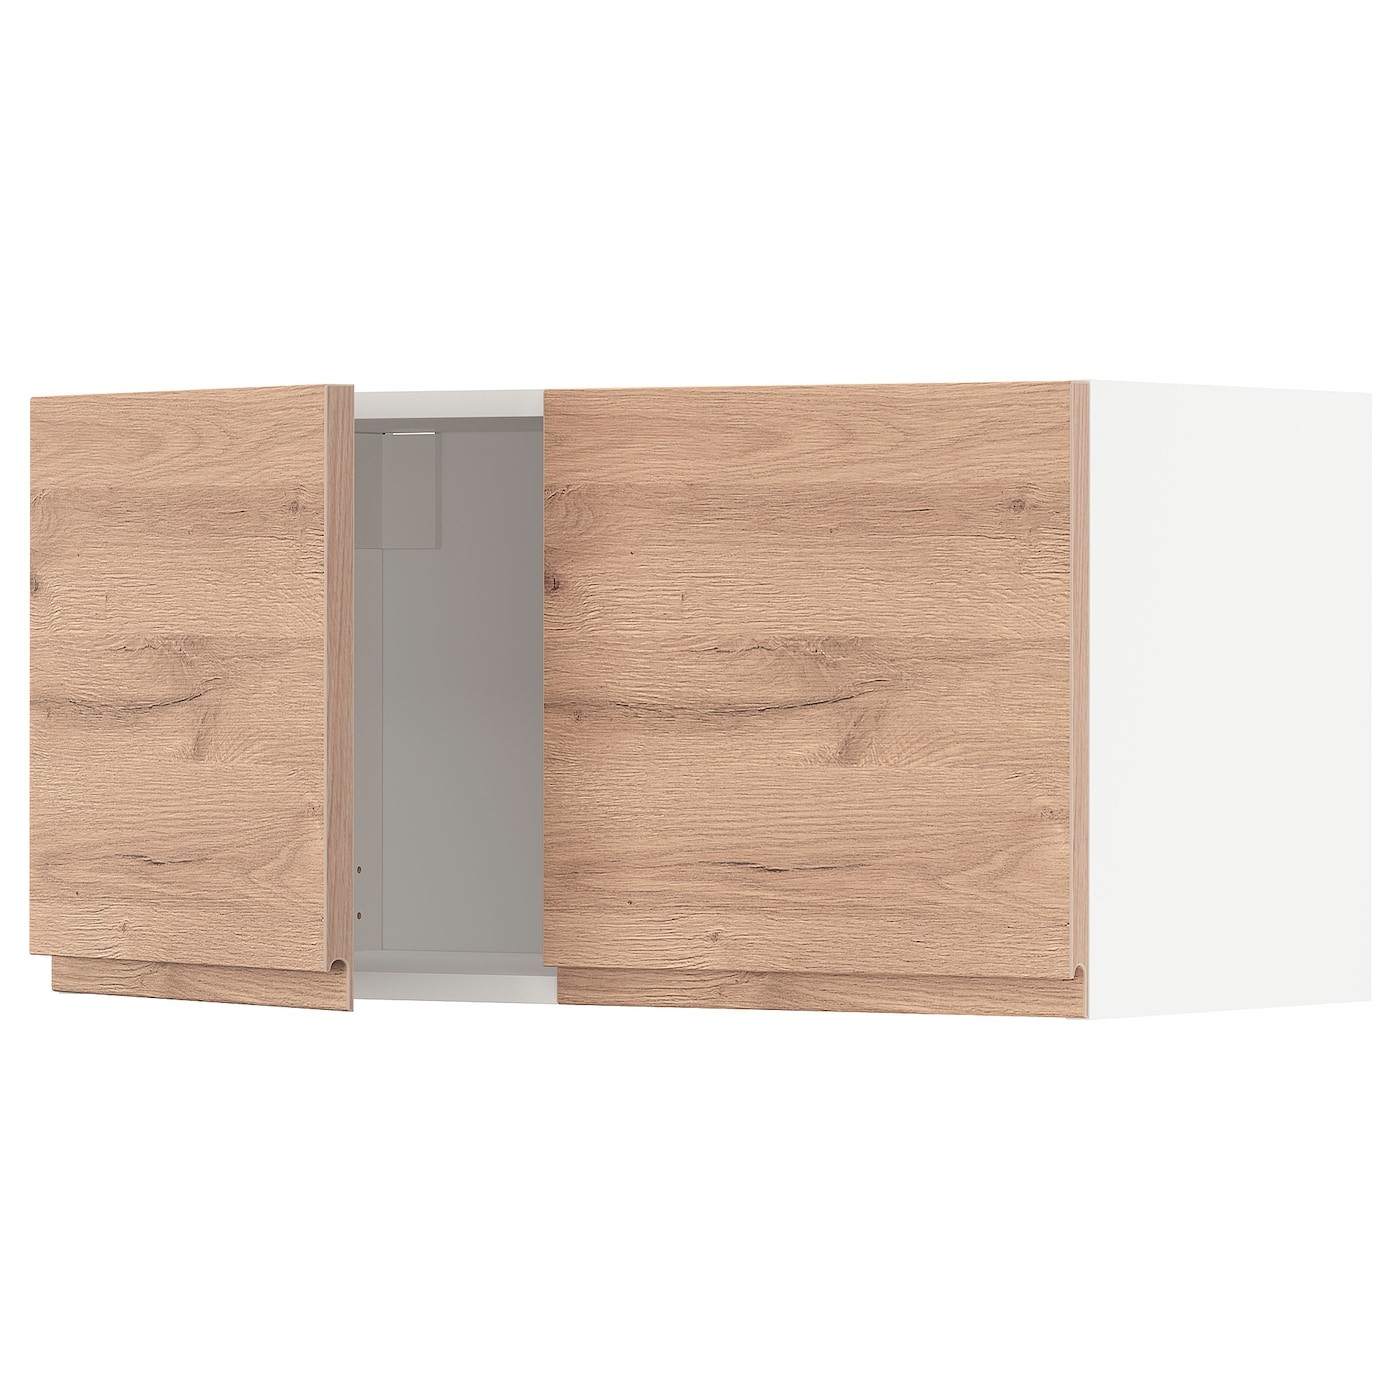 IKEA METOD МЕТОД Навесной шкаф с 2 дверями, белый / Voxtorp имитация дуб, 80x40 см 39463834 | 394.638.34